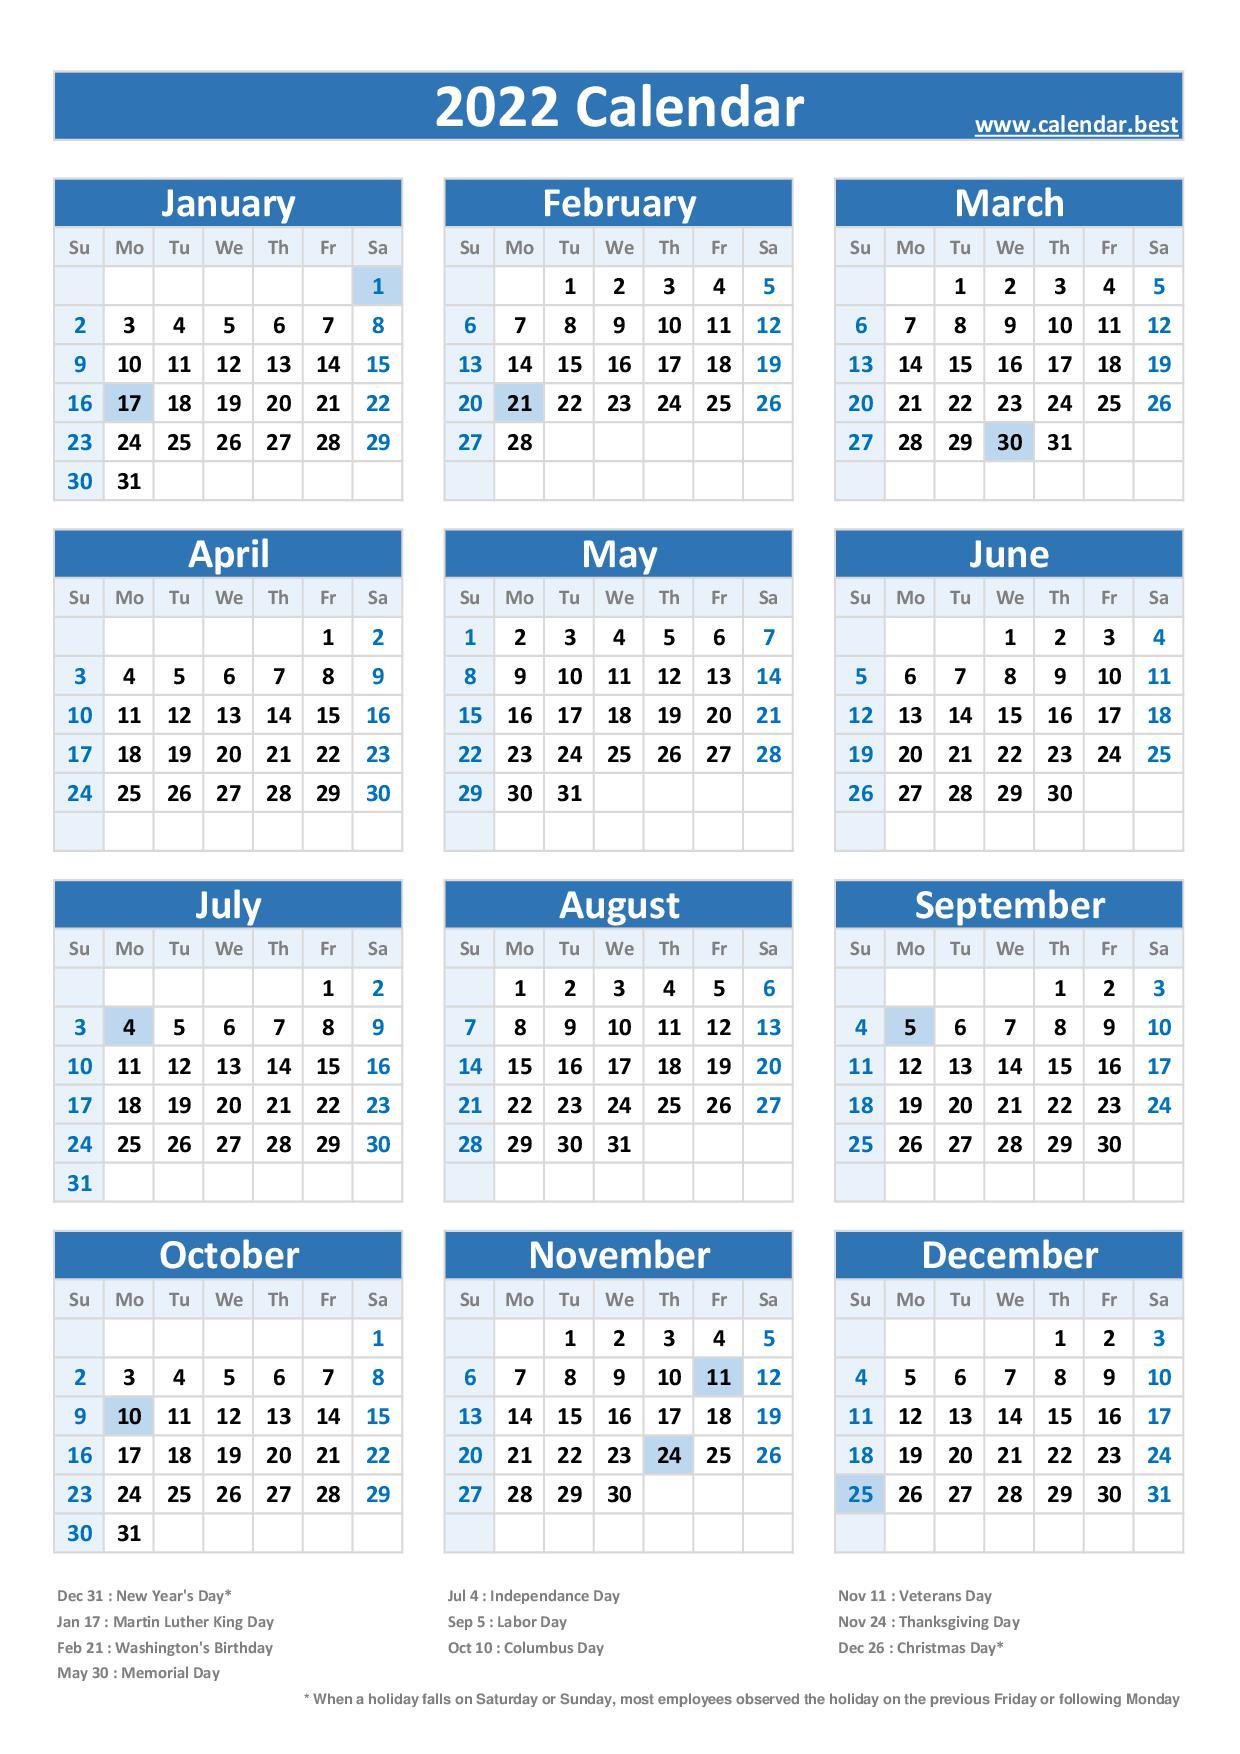 Printable 2022 Calendar With Us Holidays 2022 Calendar With Holidays (Us Federal Holidays)